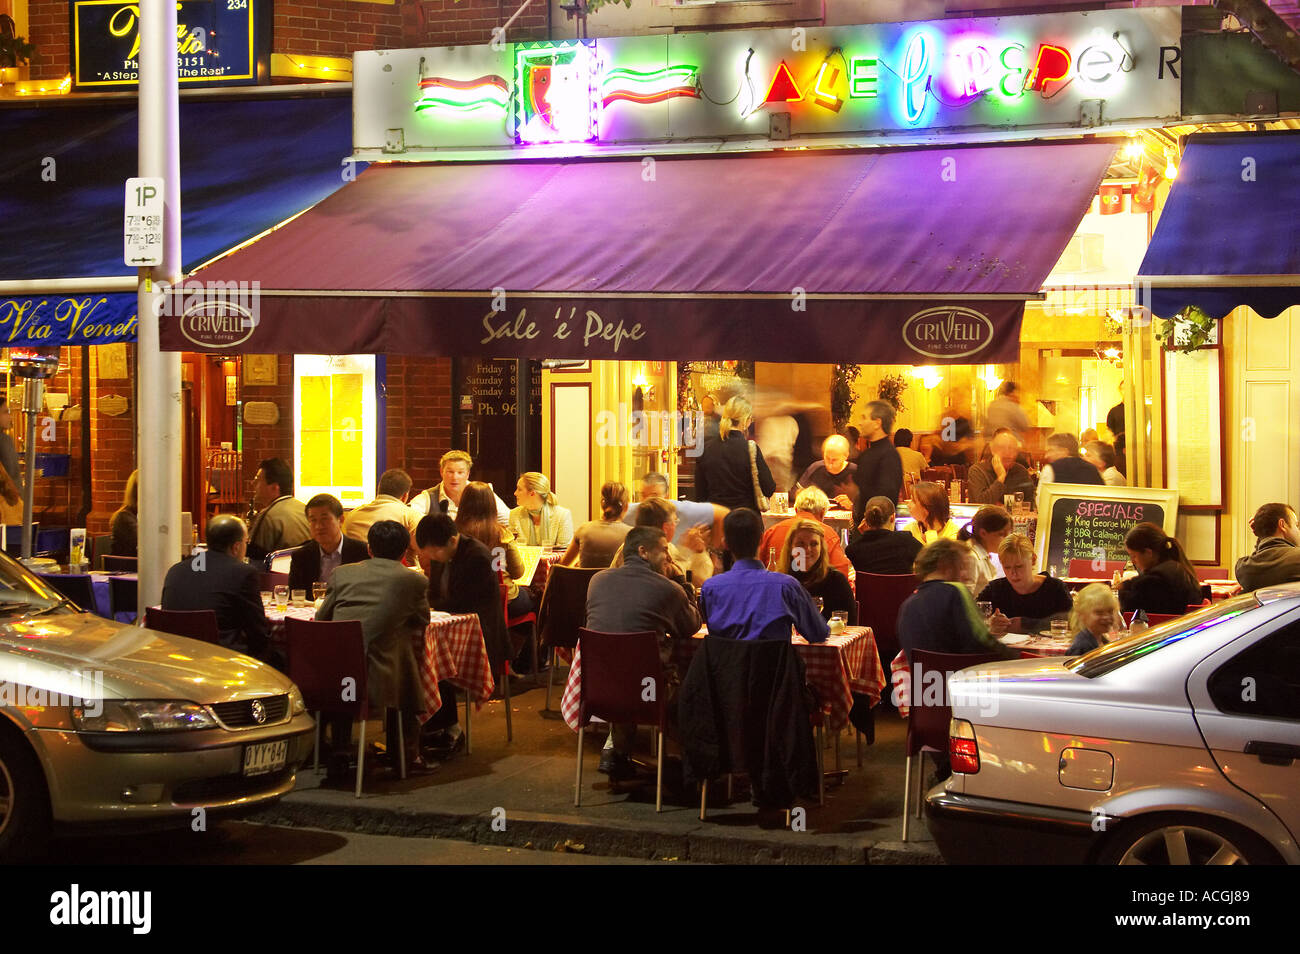 Sale e Pepe Restaurant Lygon Street Melbourne Victoria Australia Stock  Photo - Alamy